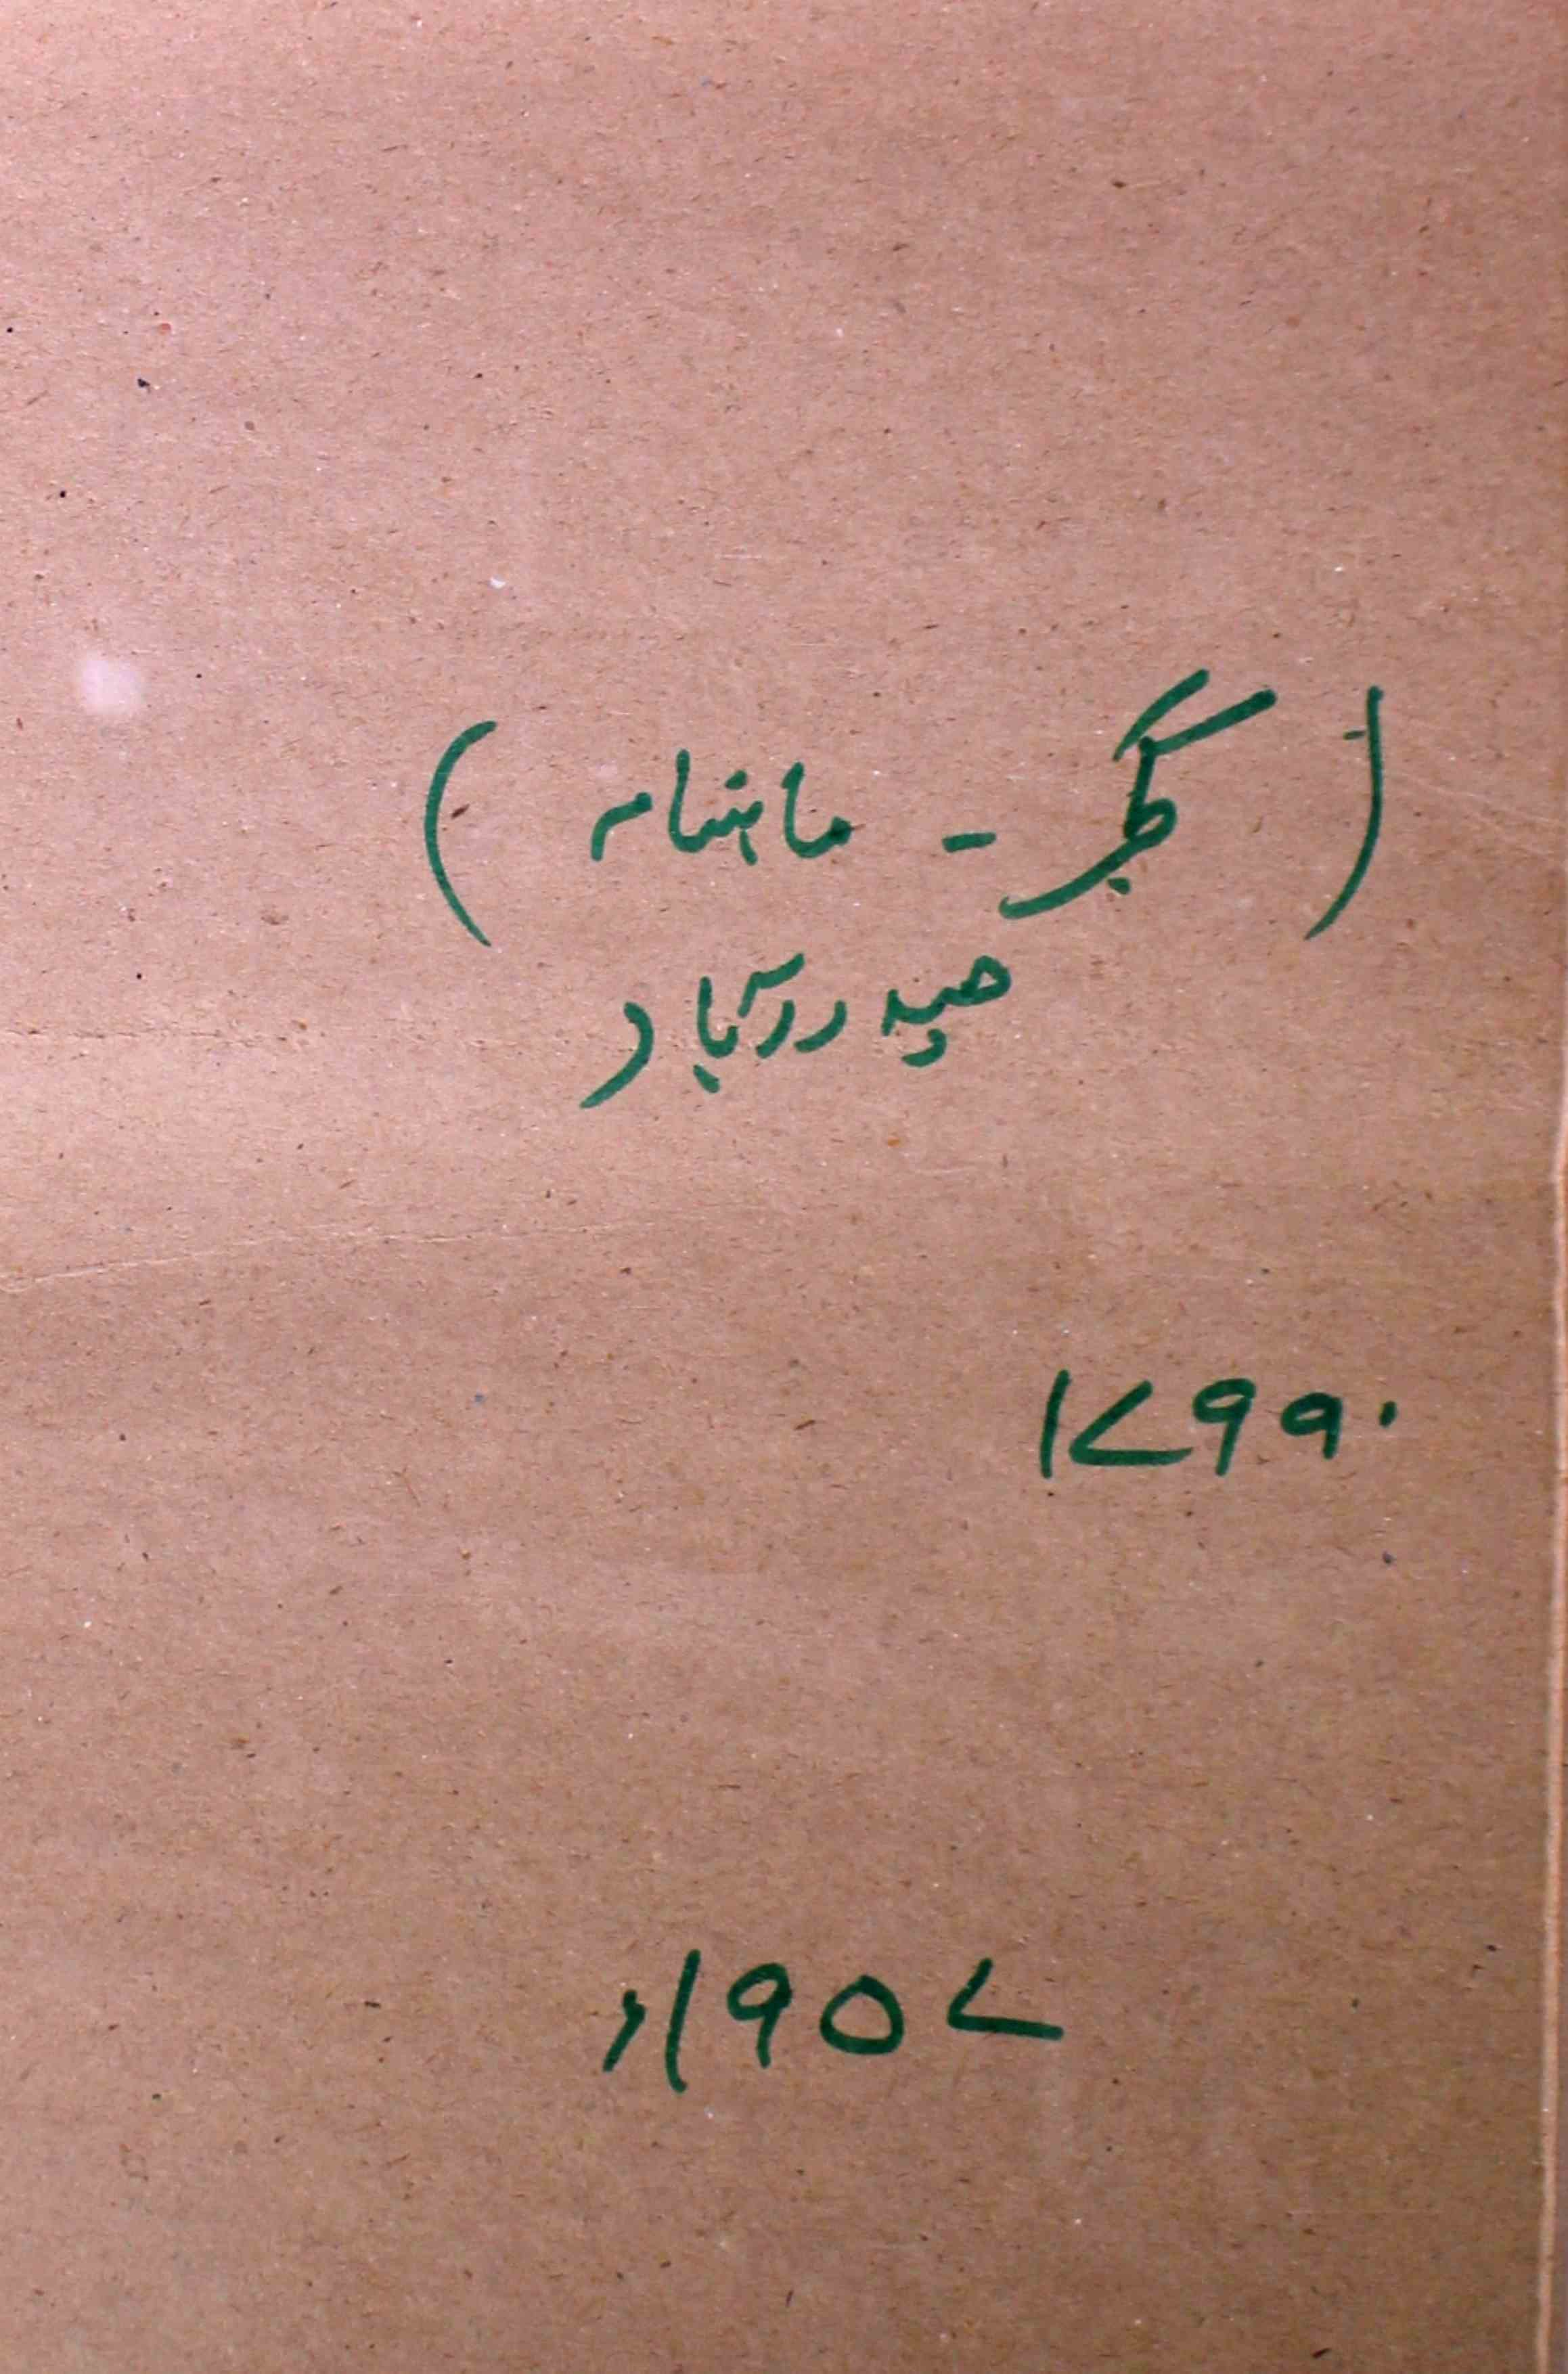 Gajar Shumara 5,6 1957-SVK-Shumara Number-005, 006